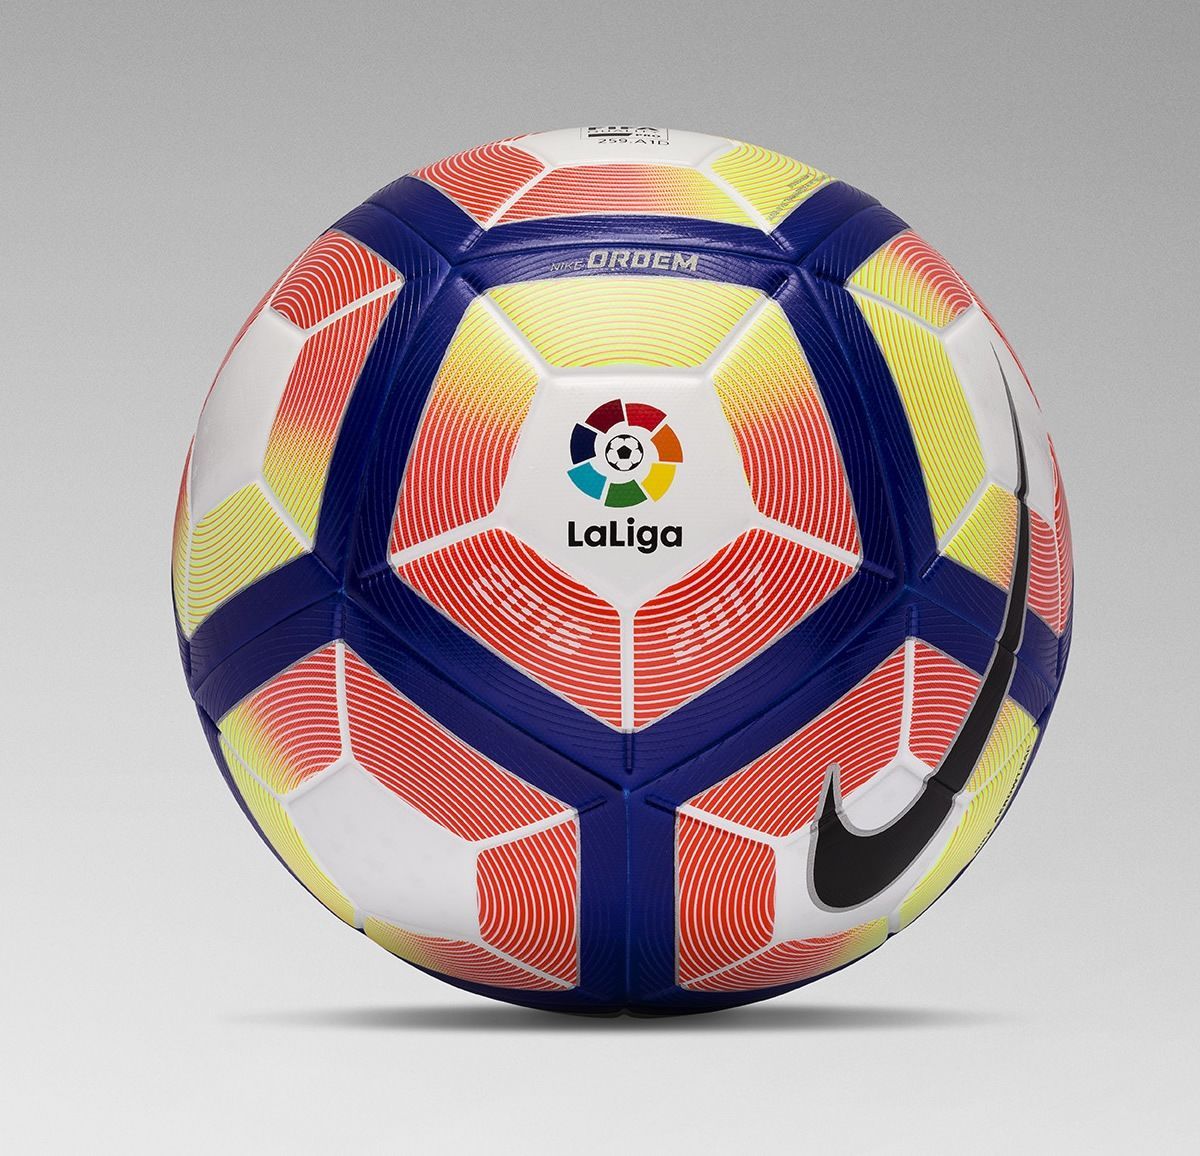 Nuevo balón para LaLiga 2016/2017 | Foto Nike